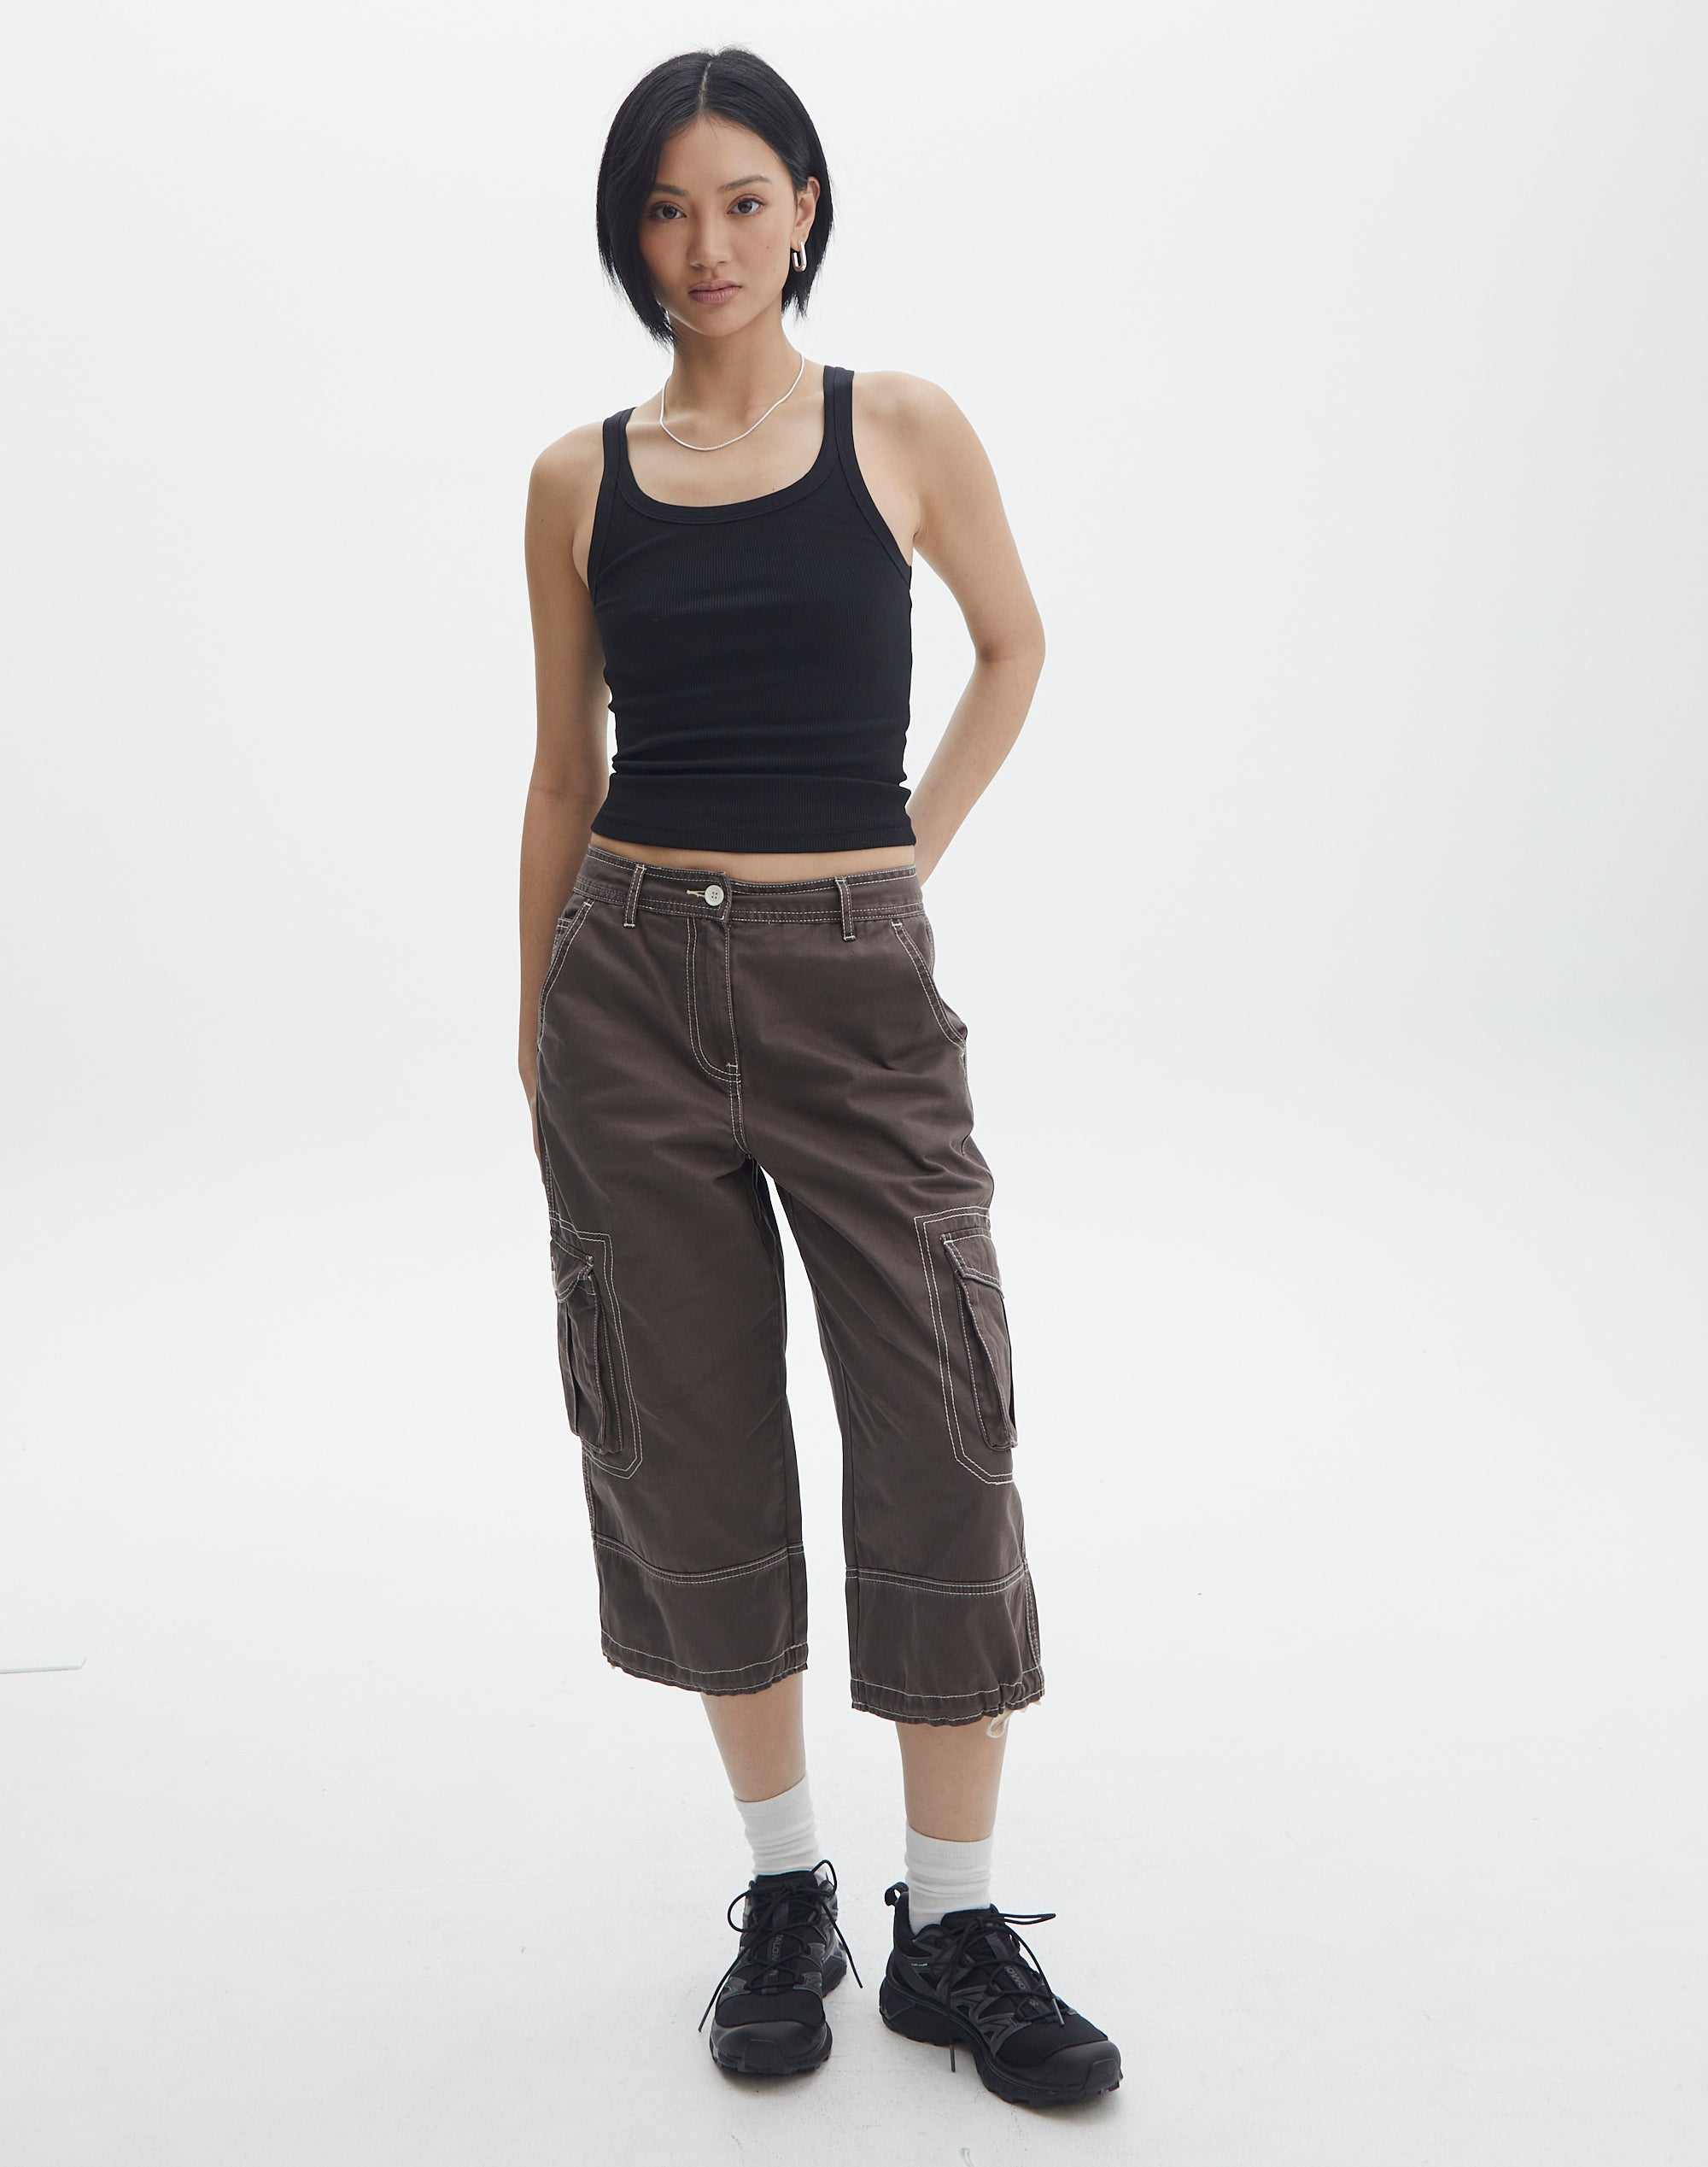 Adidas Climacool Athletic Activewear Track Pants Zip Leg Size XS All Black  | eBay